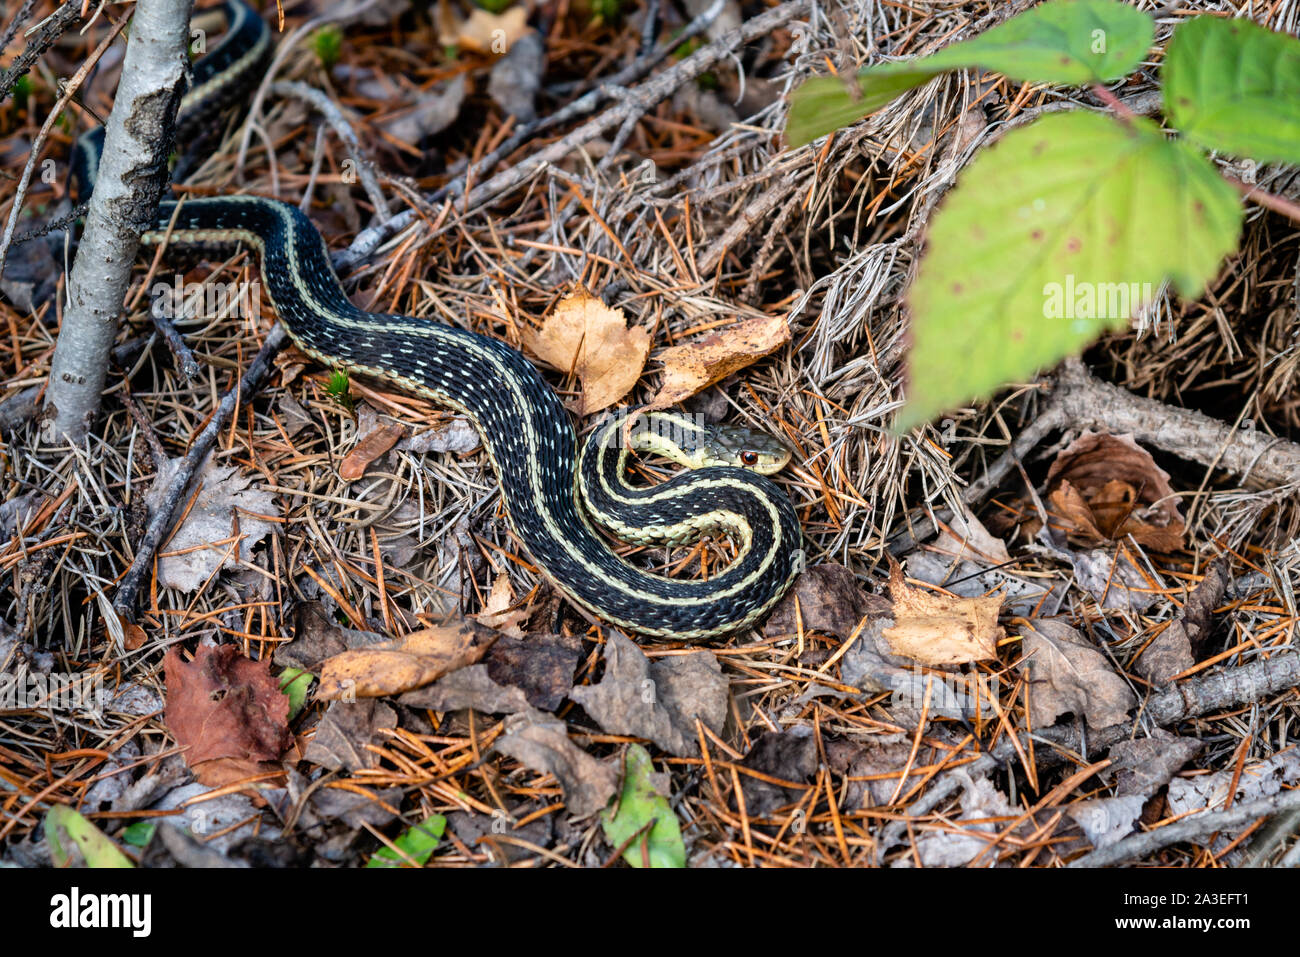 Snake sur l'herbe dans une forêt Banque D'Images